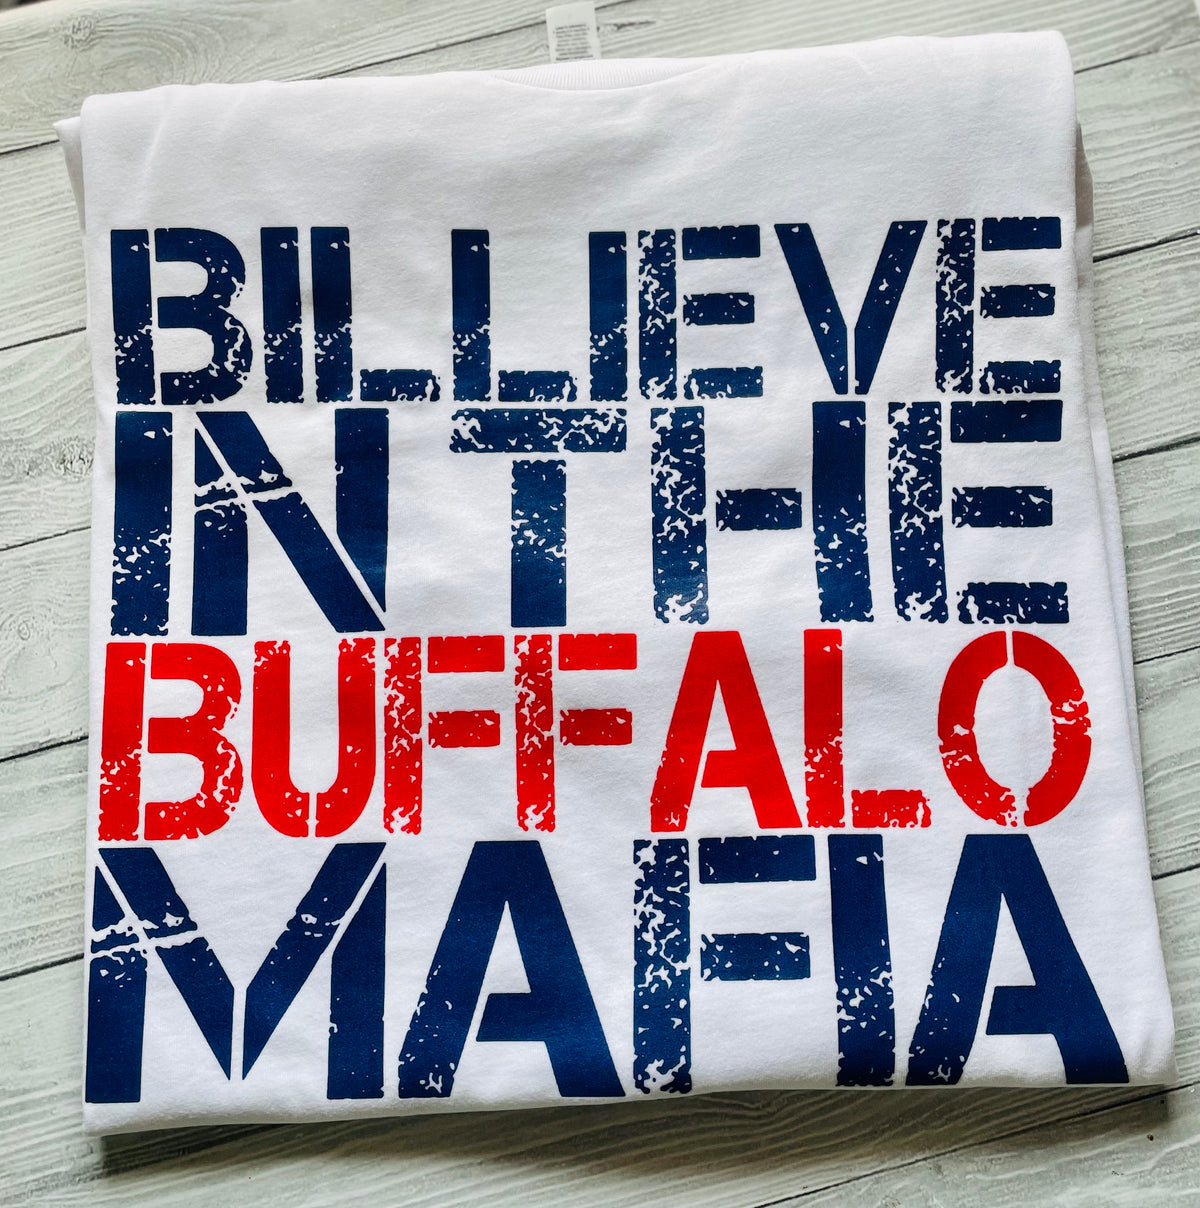 Billieve in the Buffalo mafia